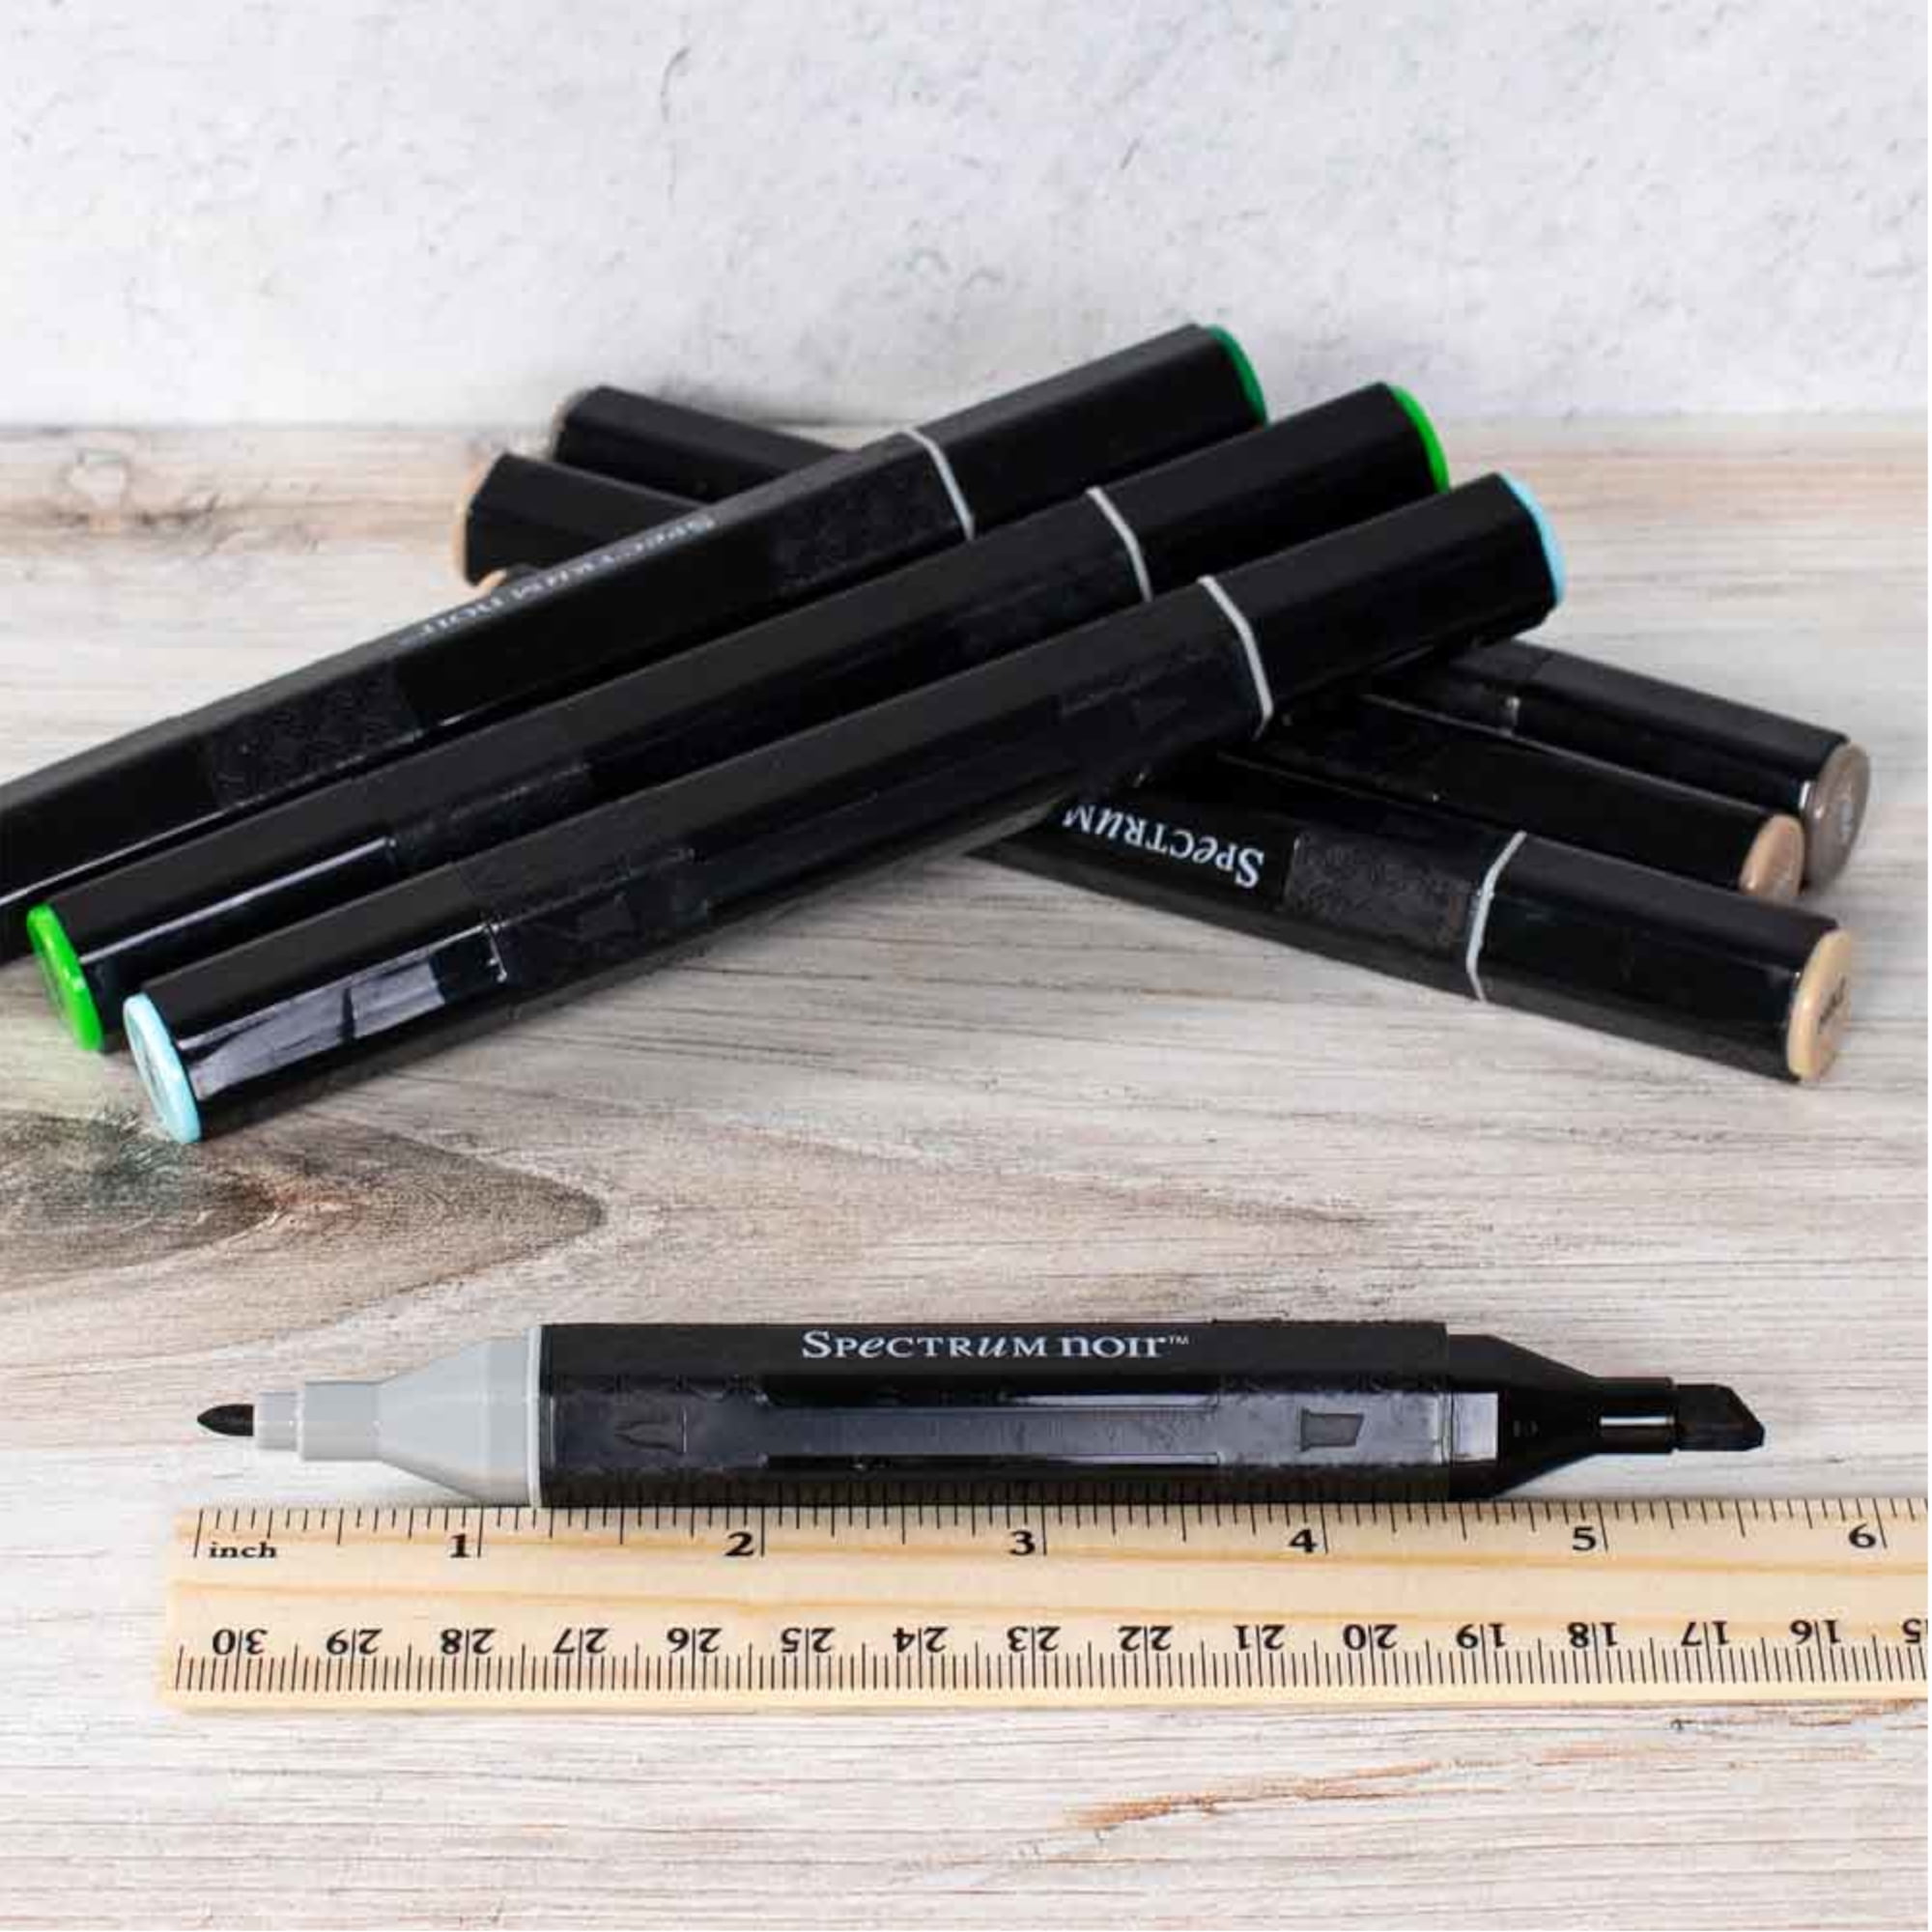 Dritz Dual Purpose Twin Marking Pen – Magnolia Market